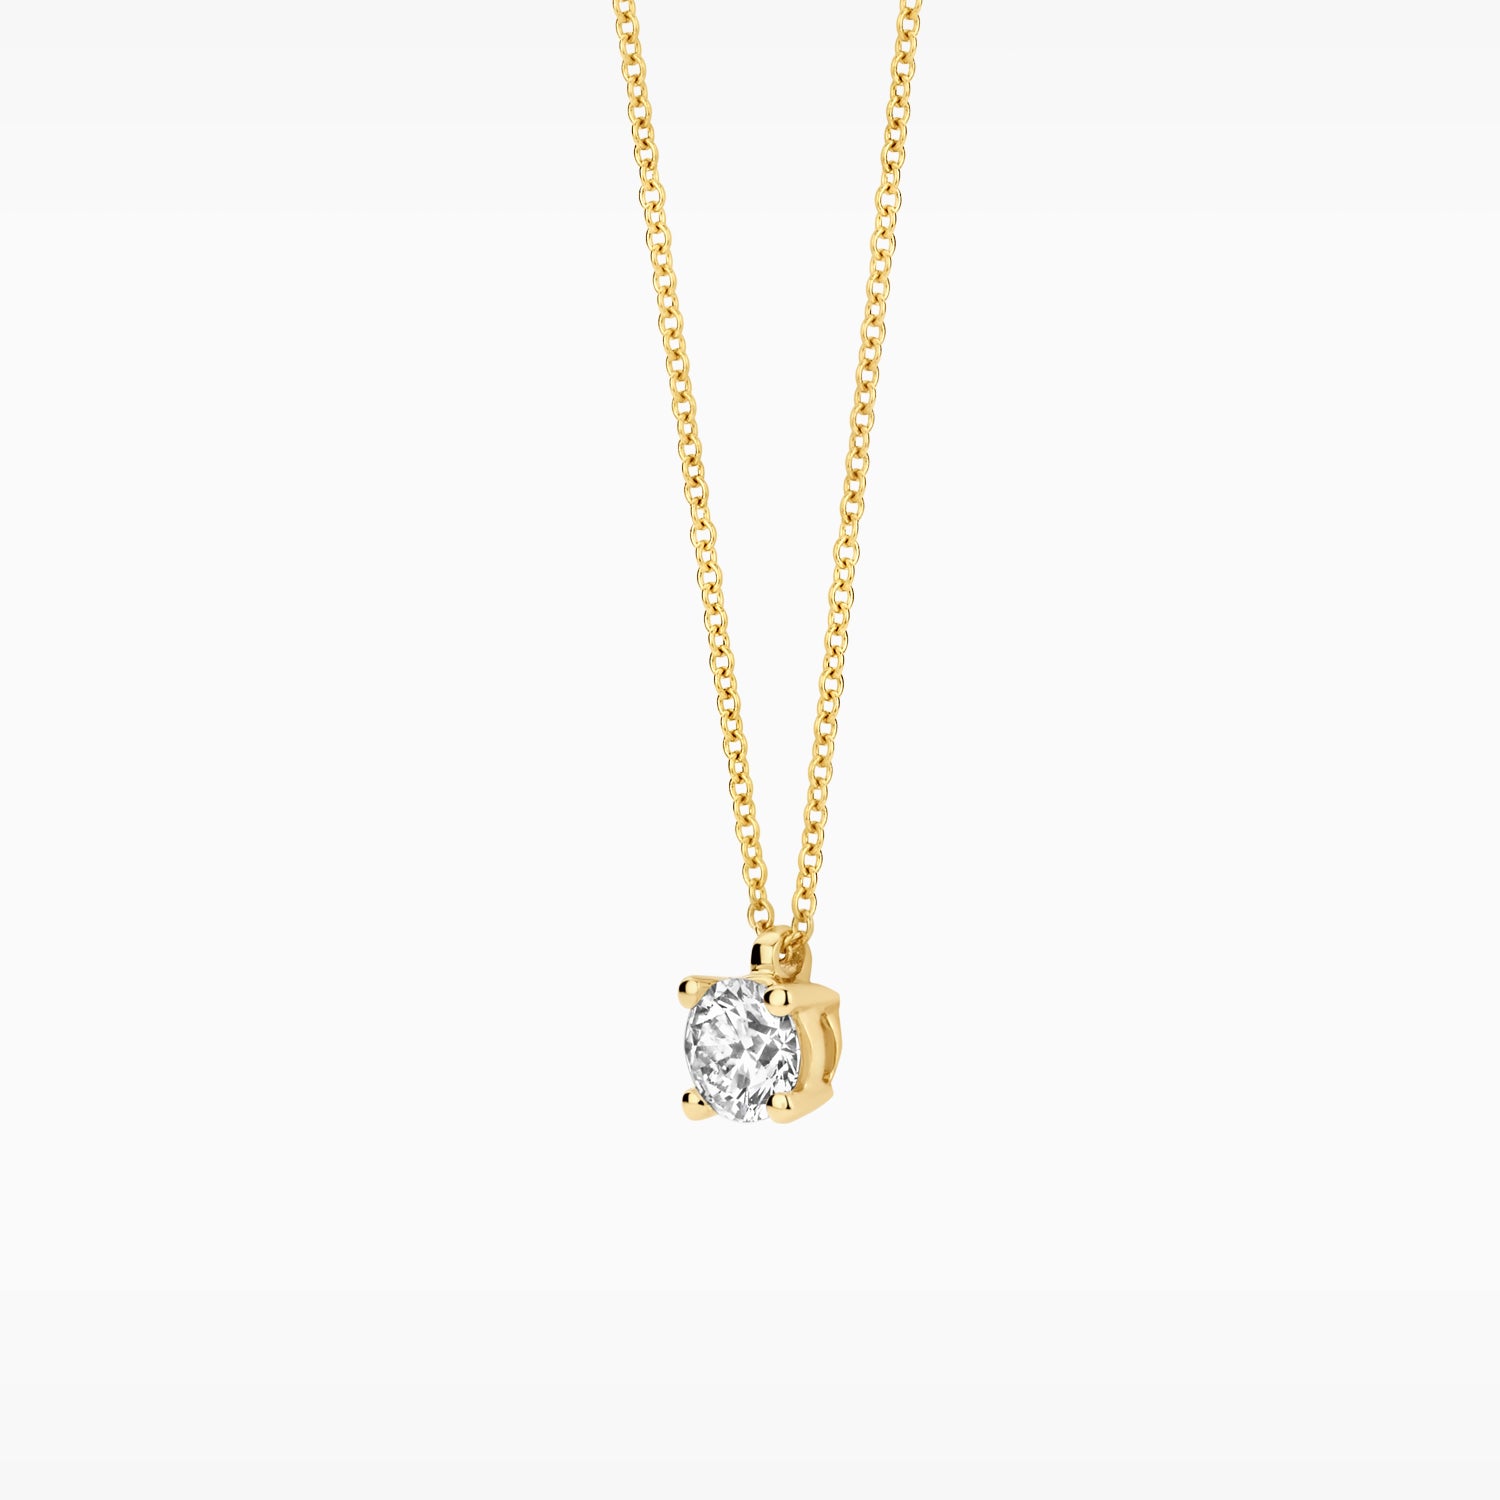 Lab diamonds necklace LG3002Y - 14k Yellow gold